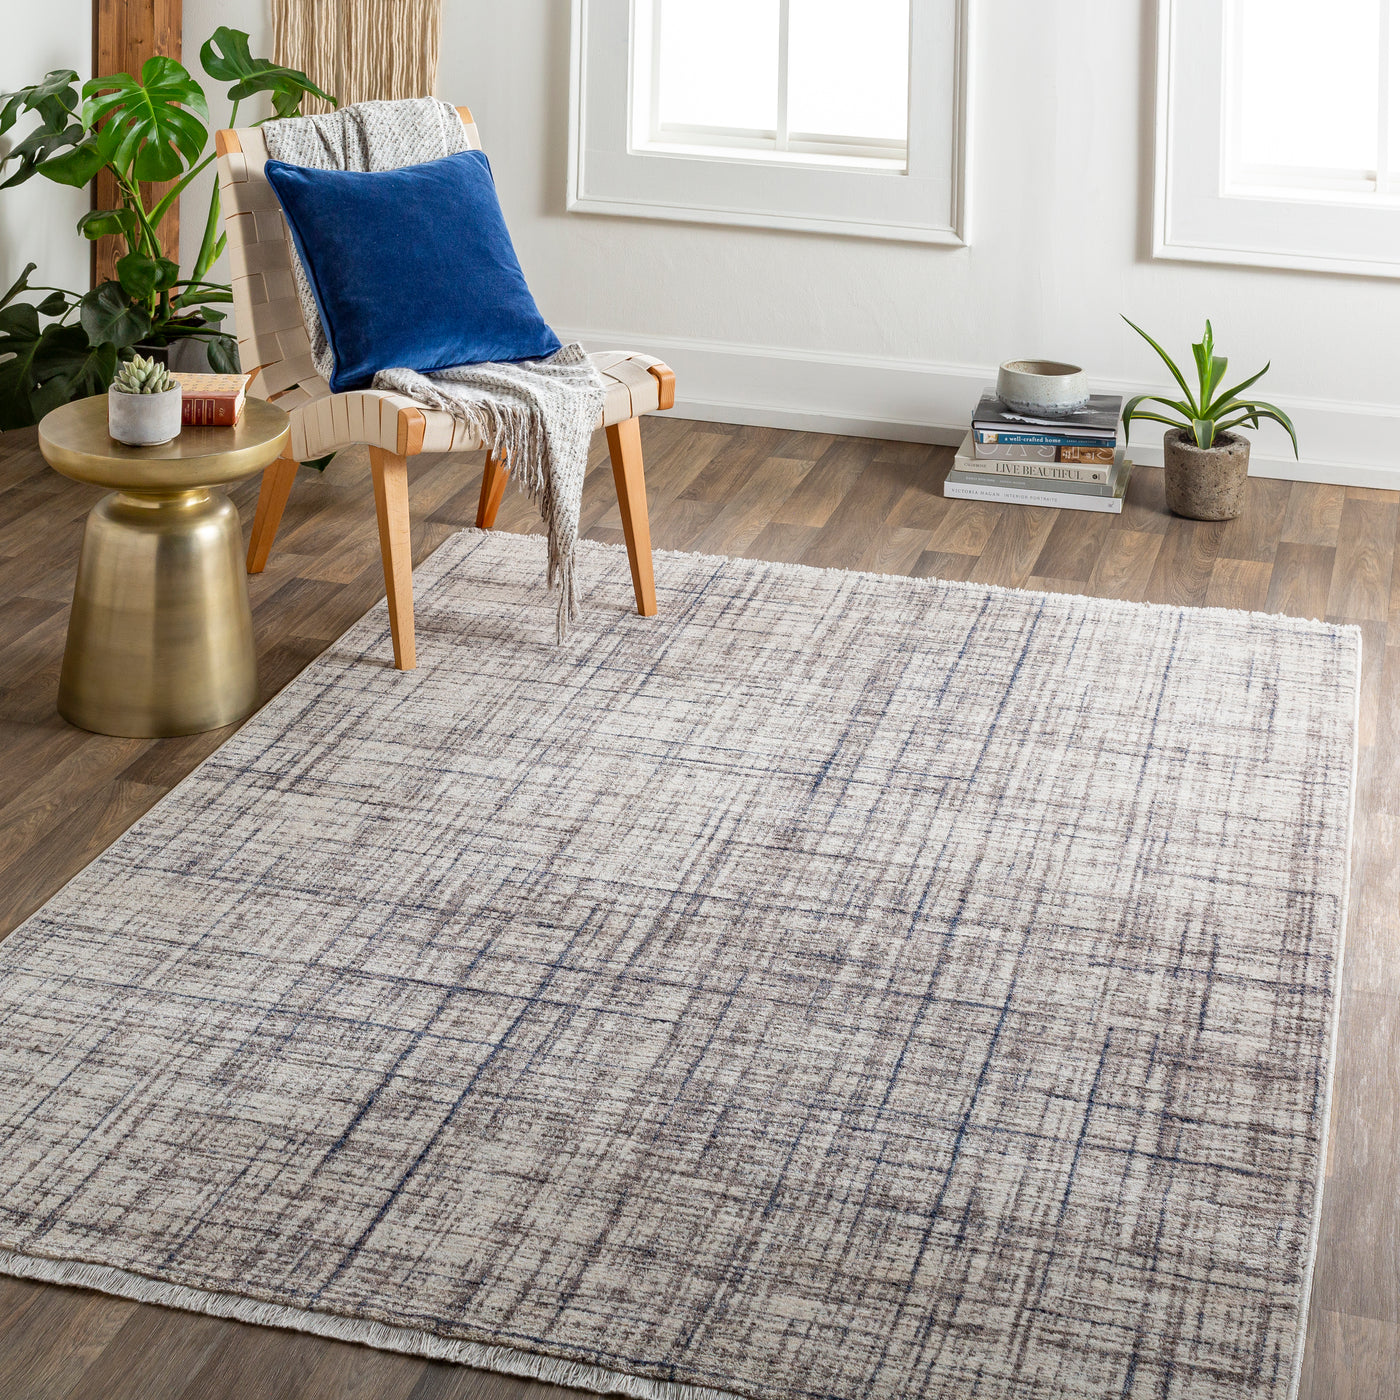 Buy Plush premium rp06 rug pad Online at the Lowest Price